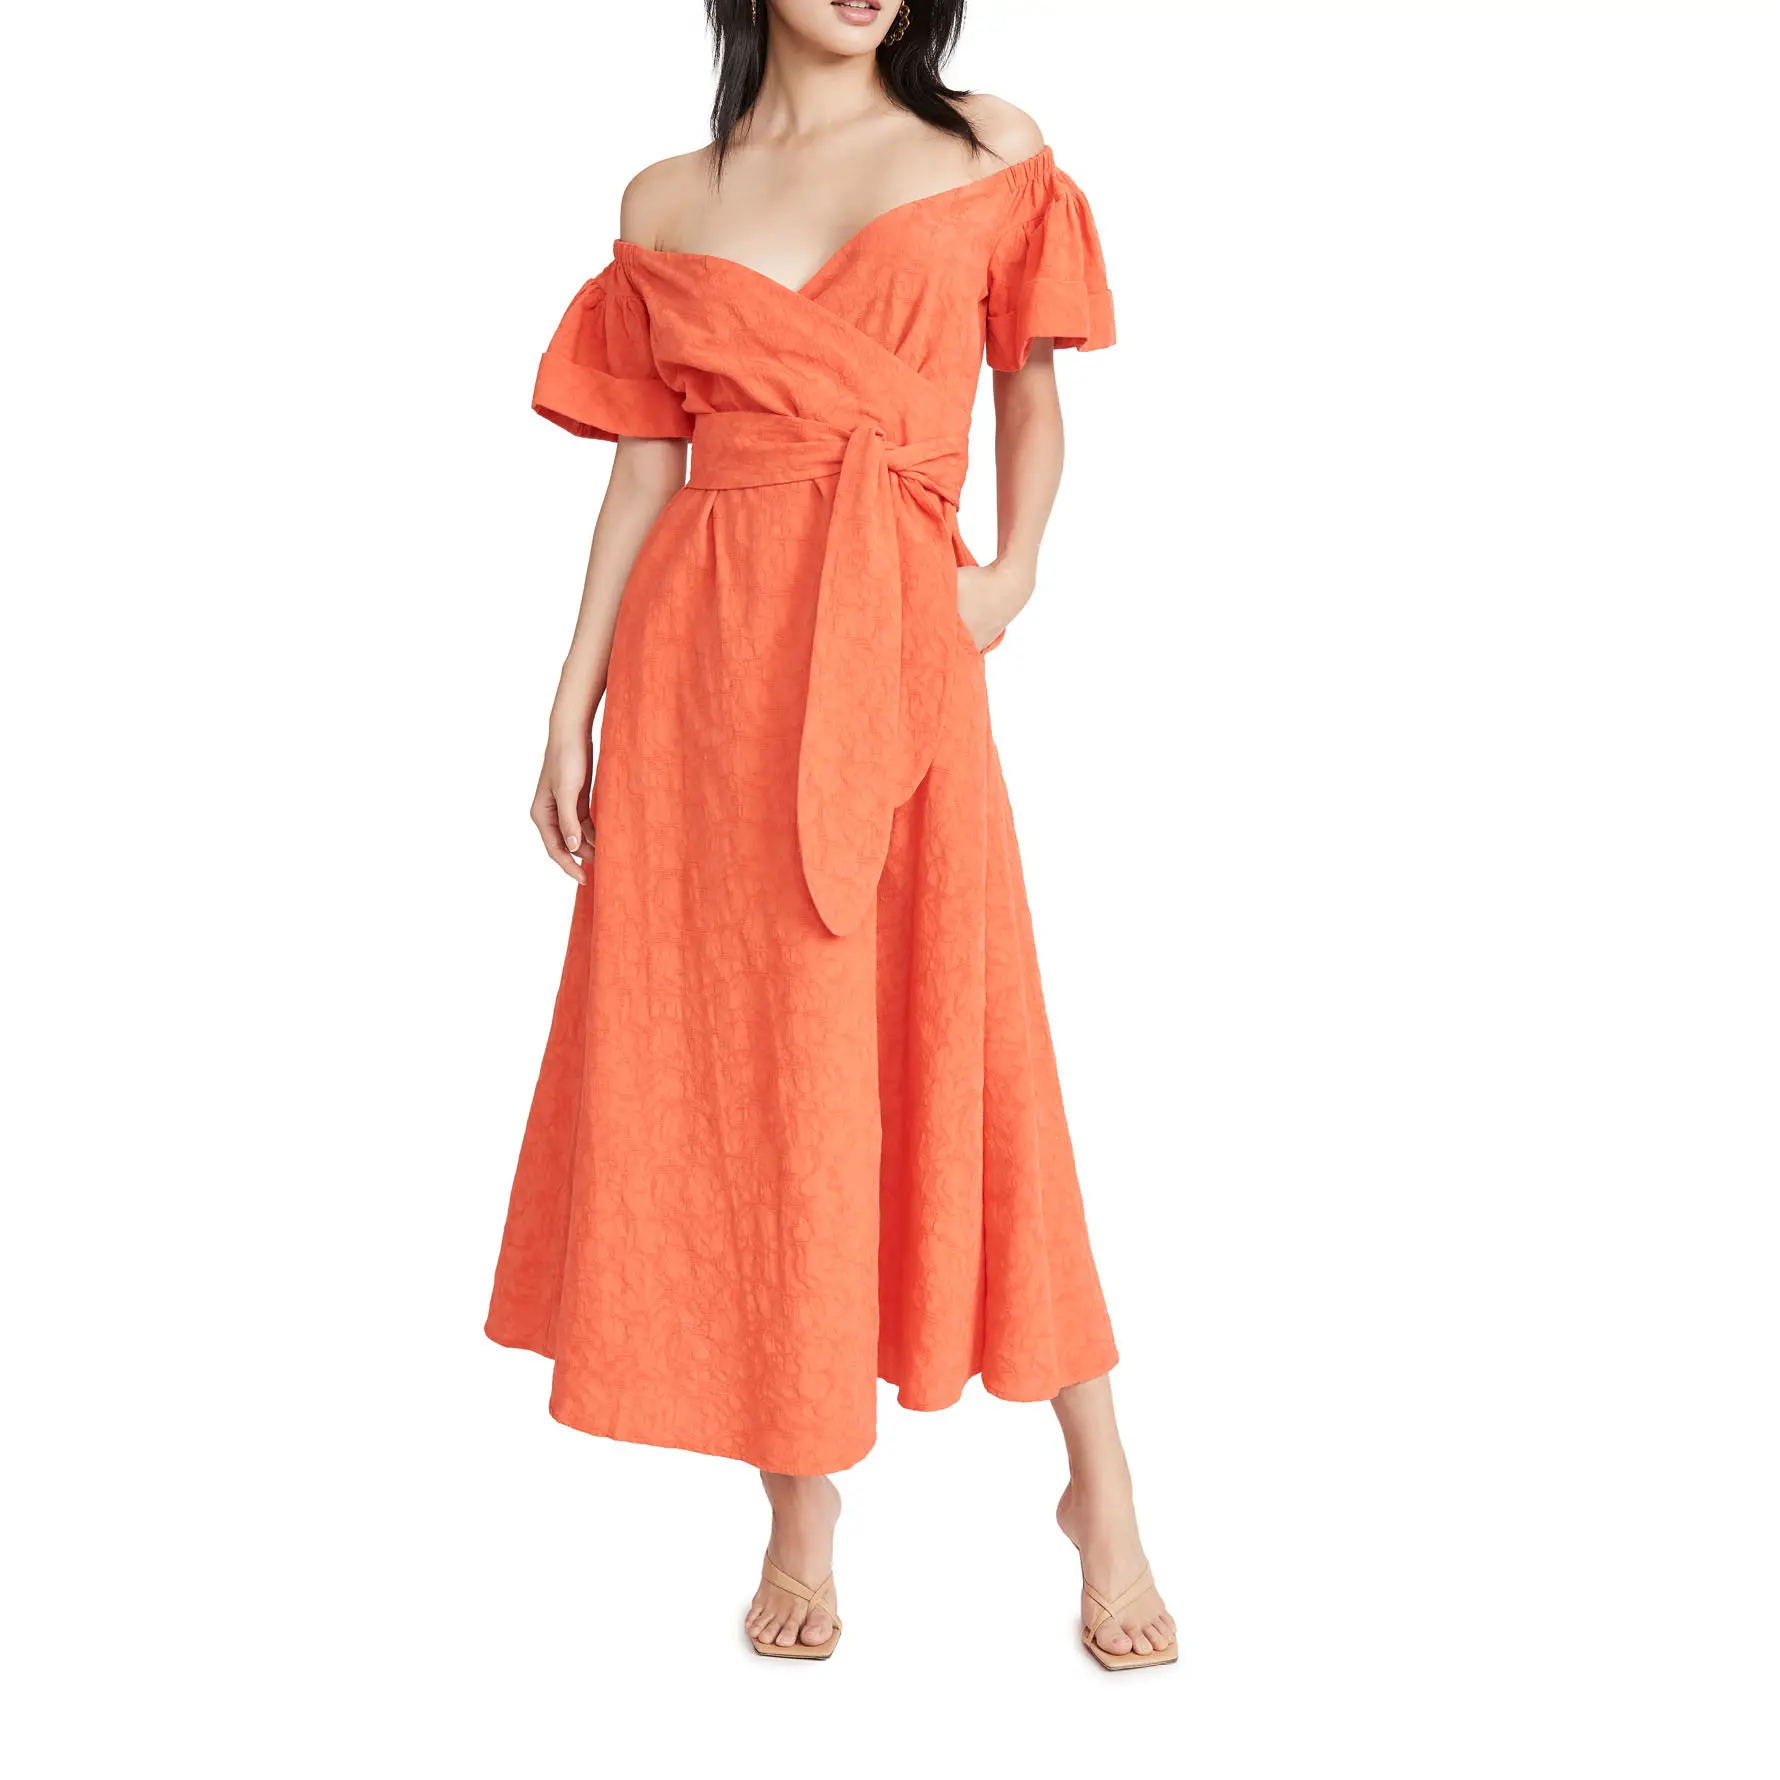 100% Cotton Orange Off The Shoulder Short Sleeve Maxi Dress For Women